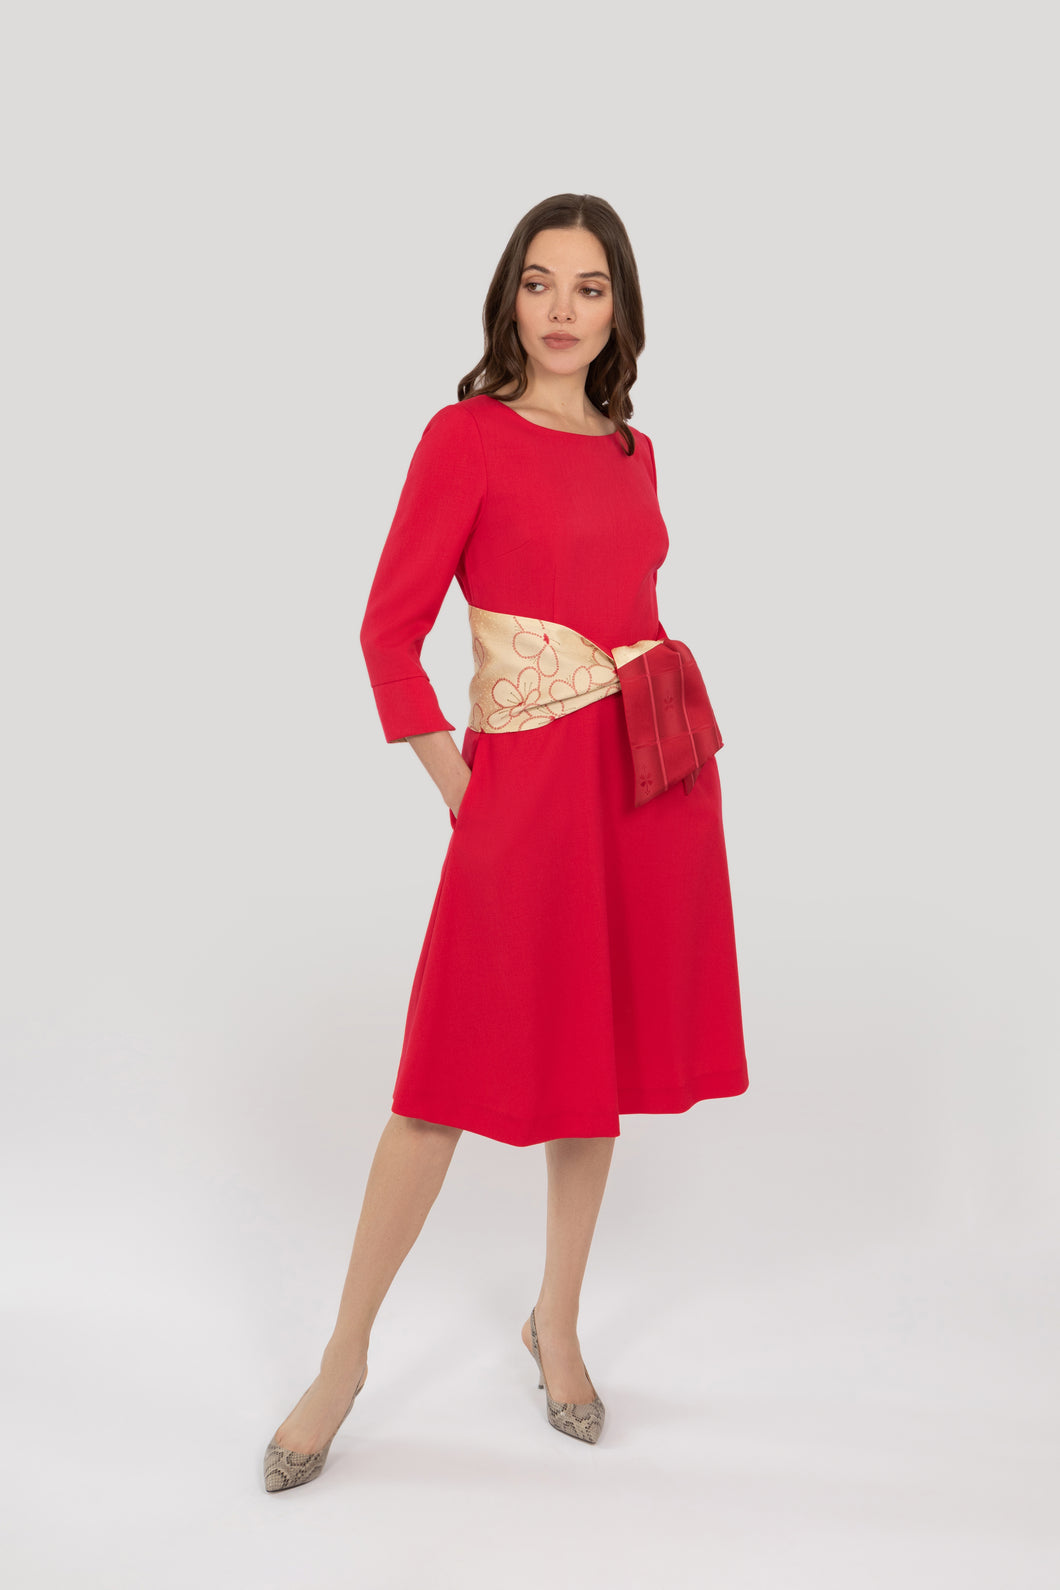 Audrey Dress - Cerise Red